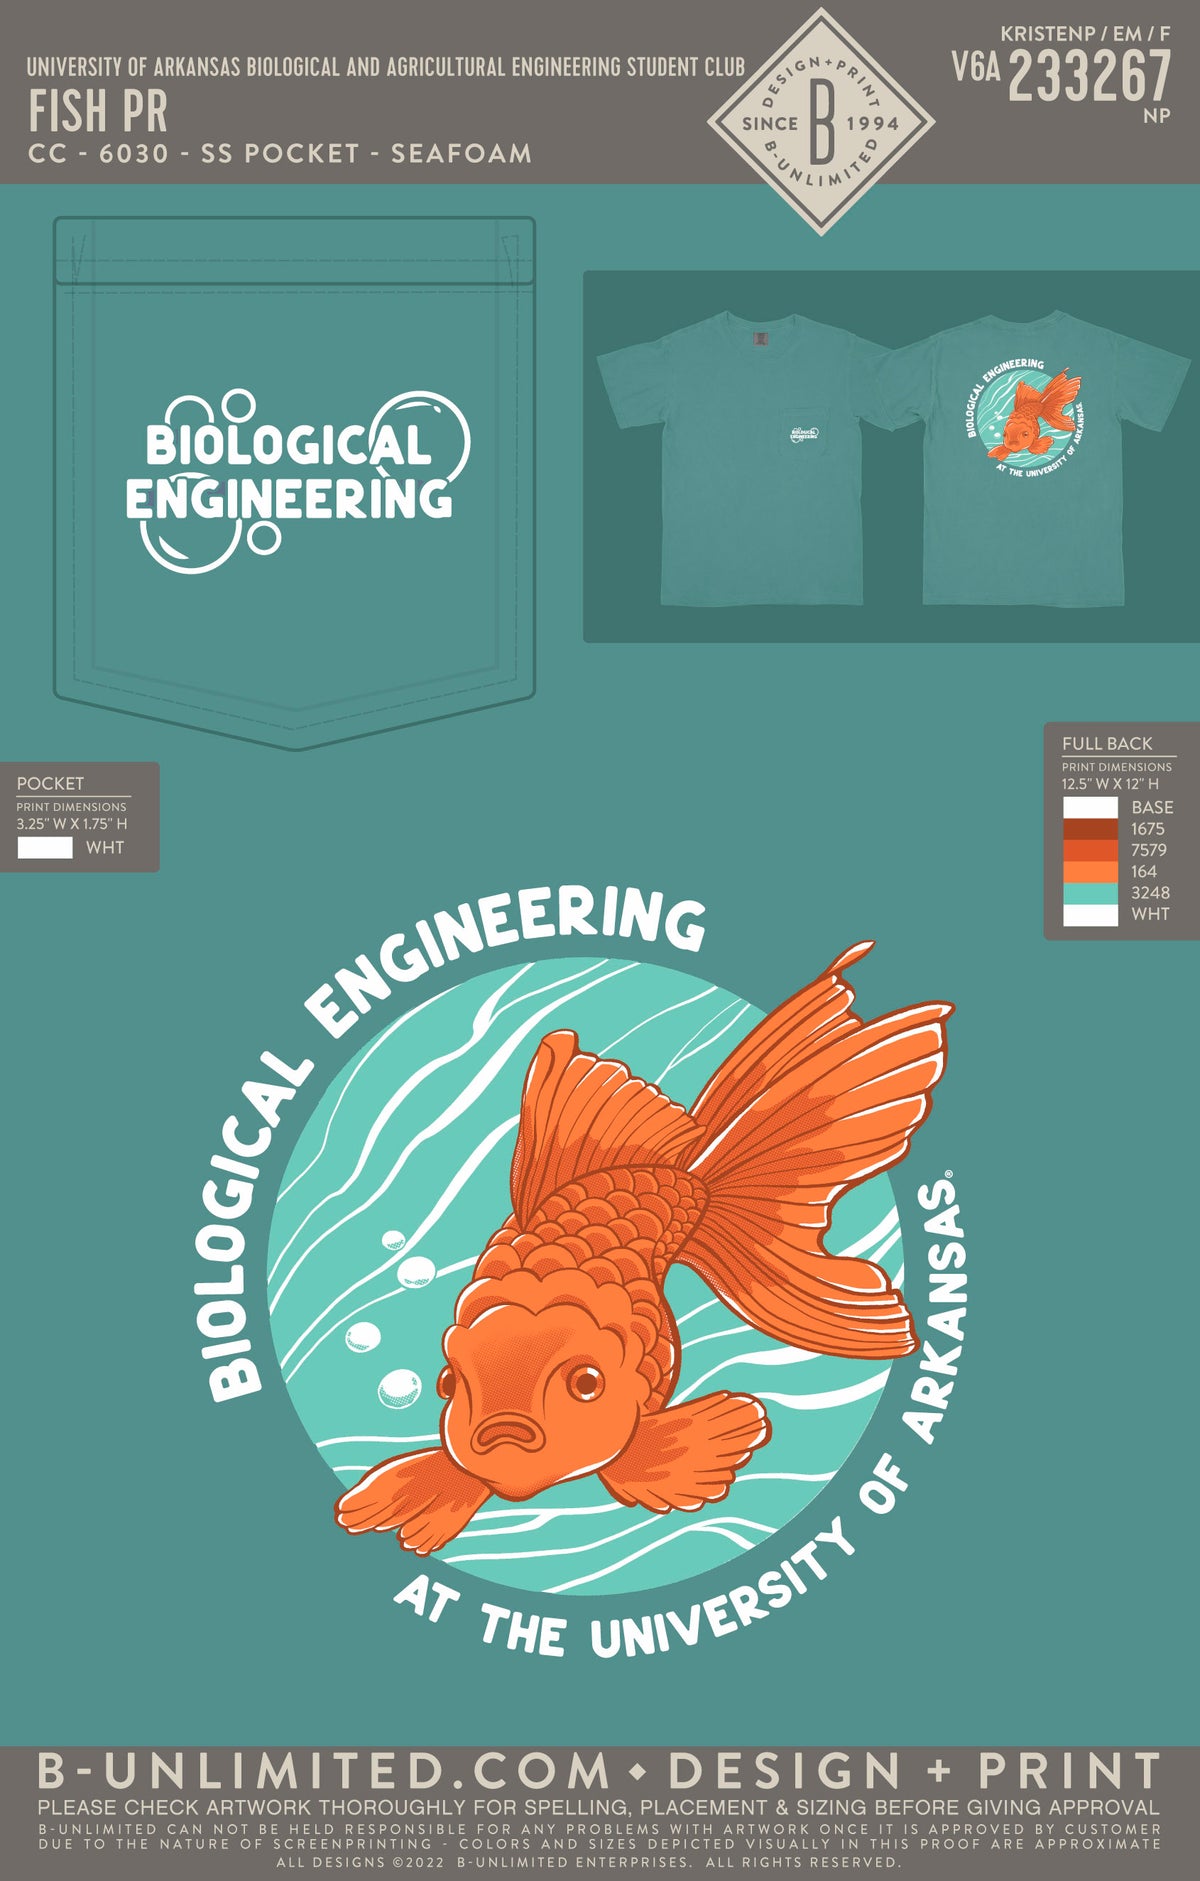 University of Arkansas Biological Engineering - Fish PR - CC - 6030 - SS Pocket - Seafoam